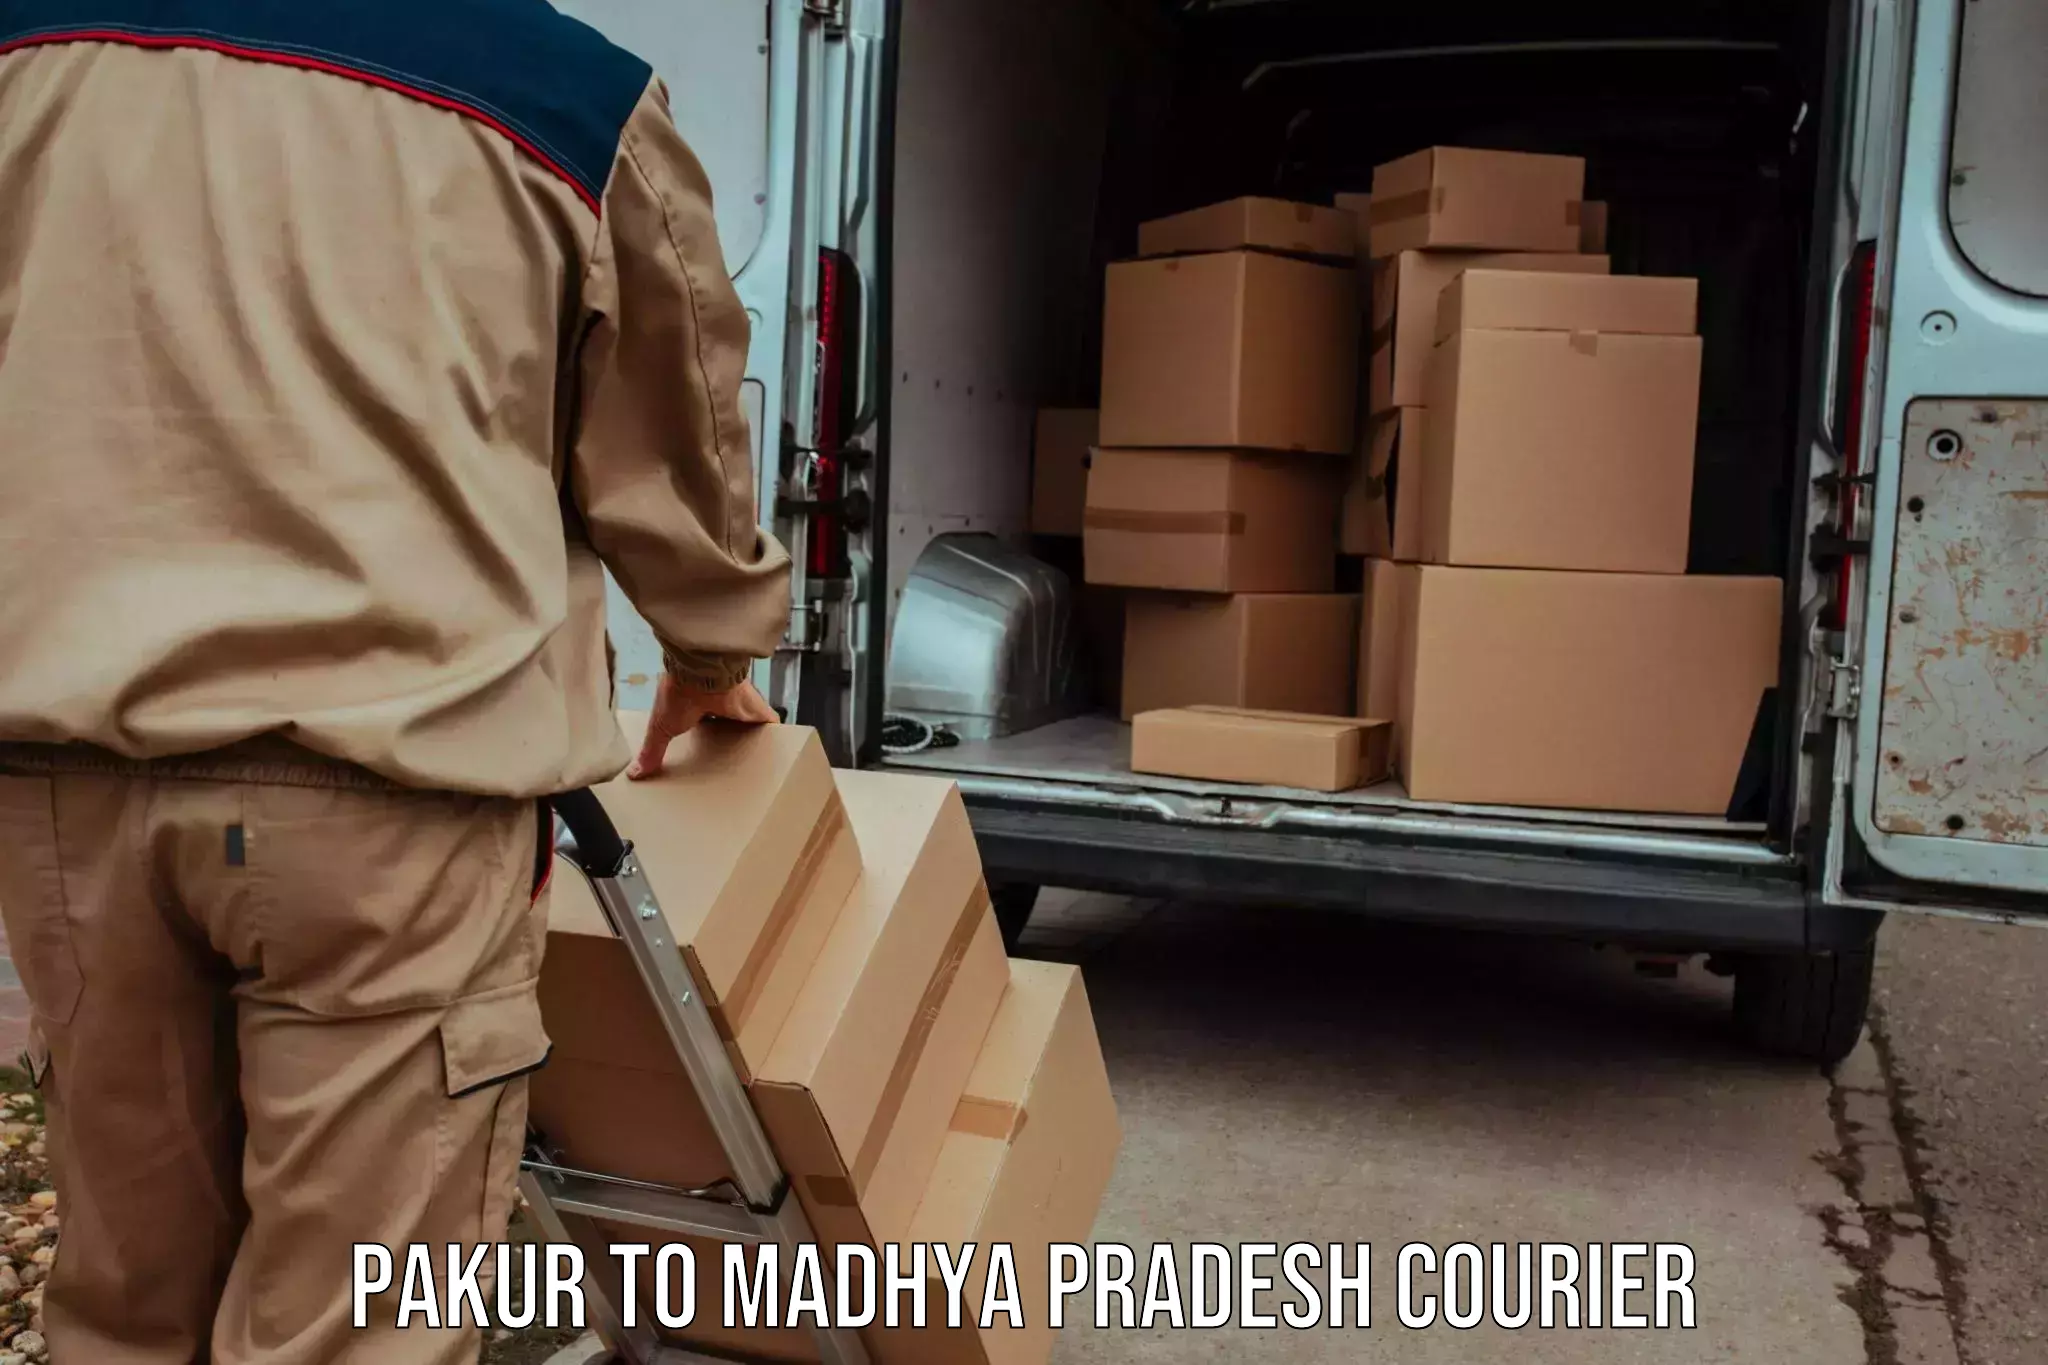 Doorstep delivery service Pakur to Madhya Pradesh